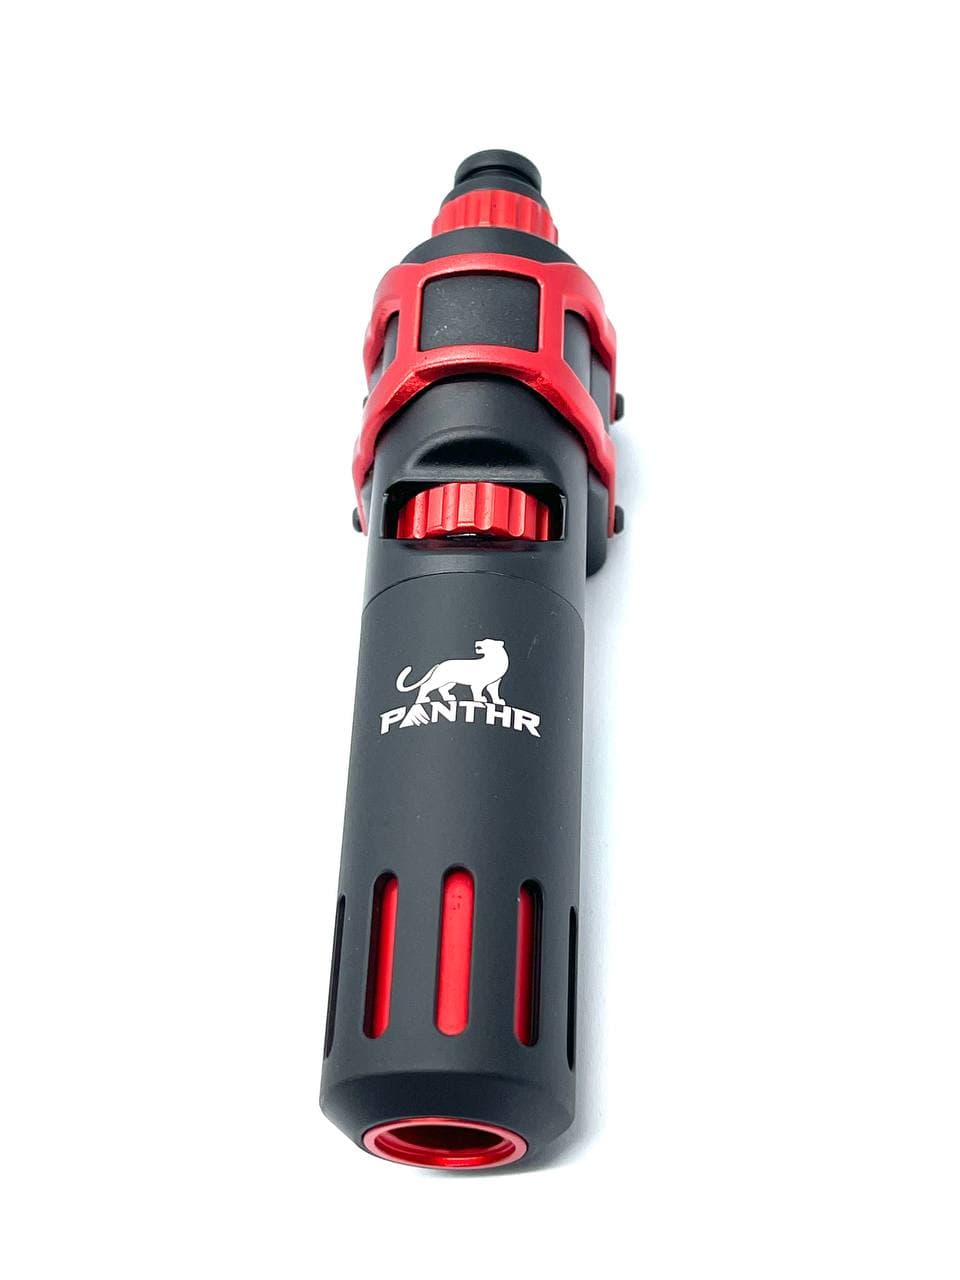 PanthR Beast V1